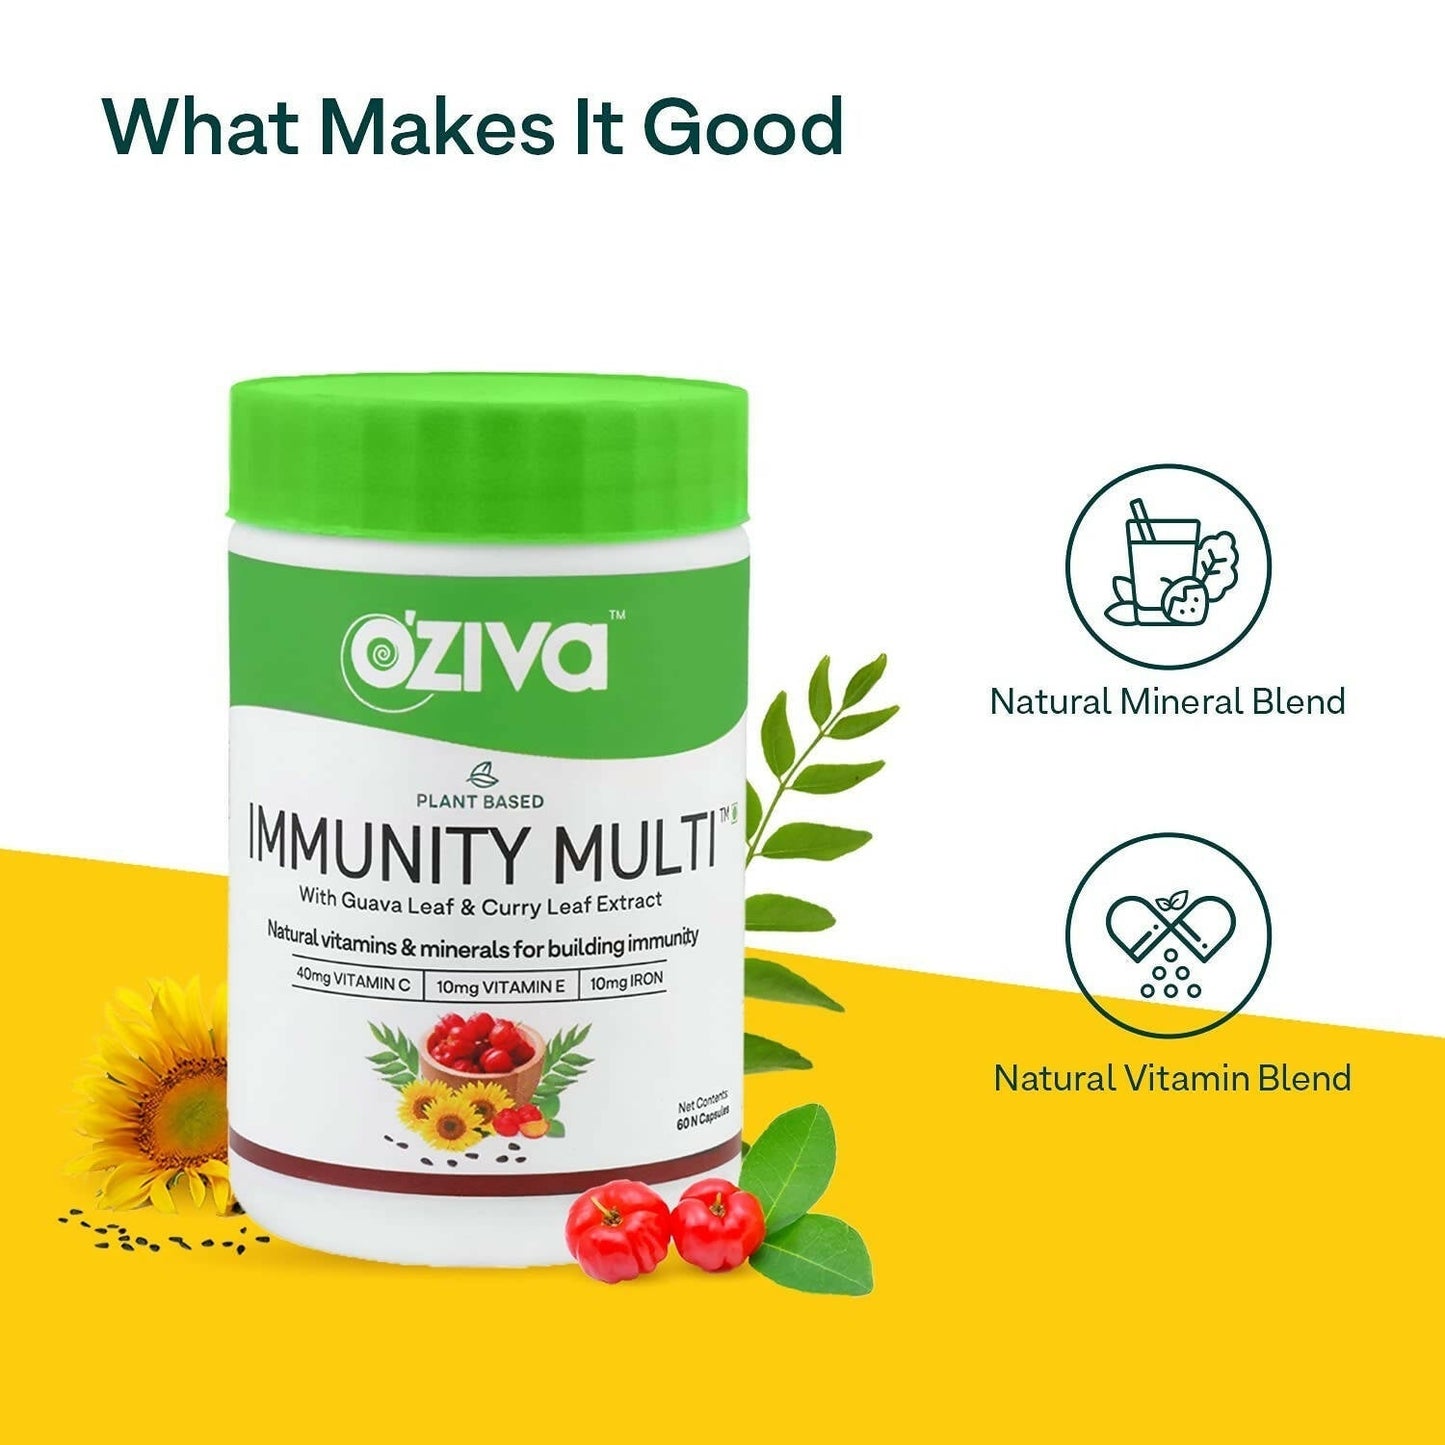 OZiva Plant Based Immunity Multivitamin with Guava Leaf & Curry Leaf Extract Capsules